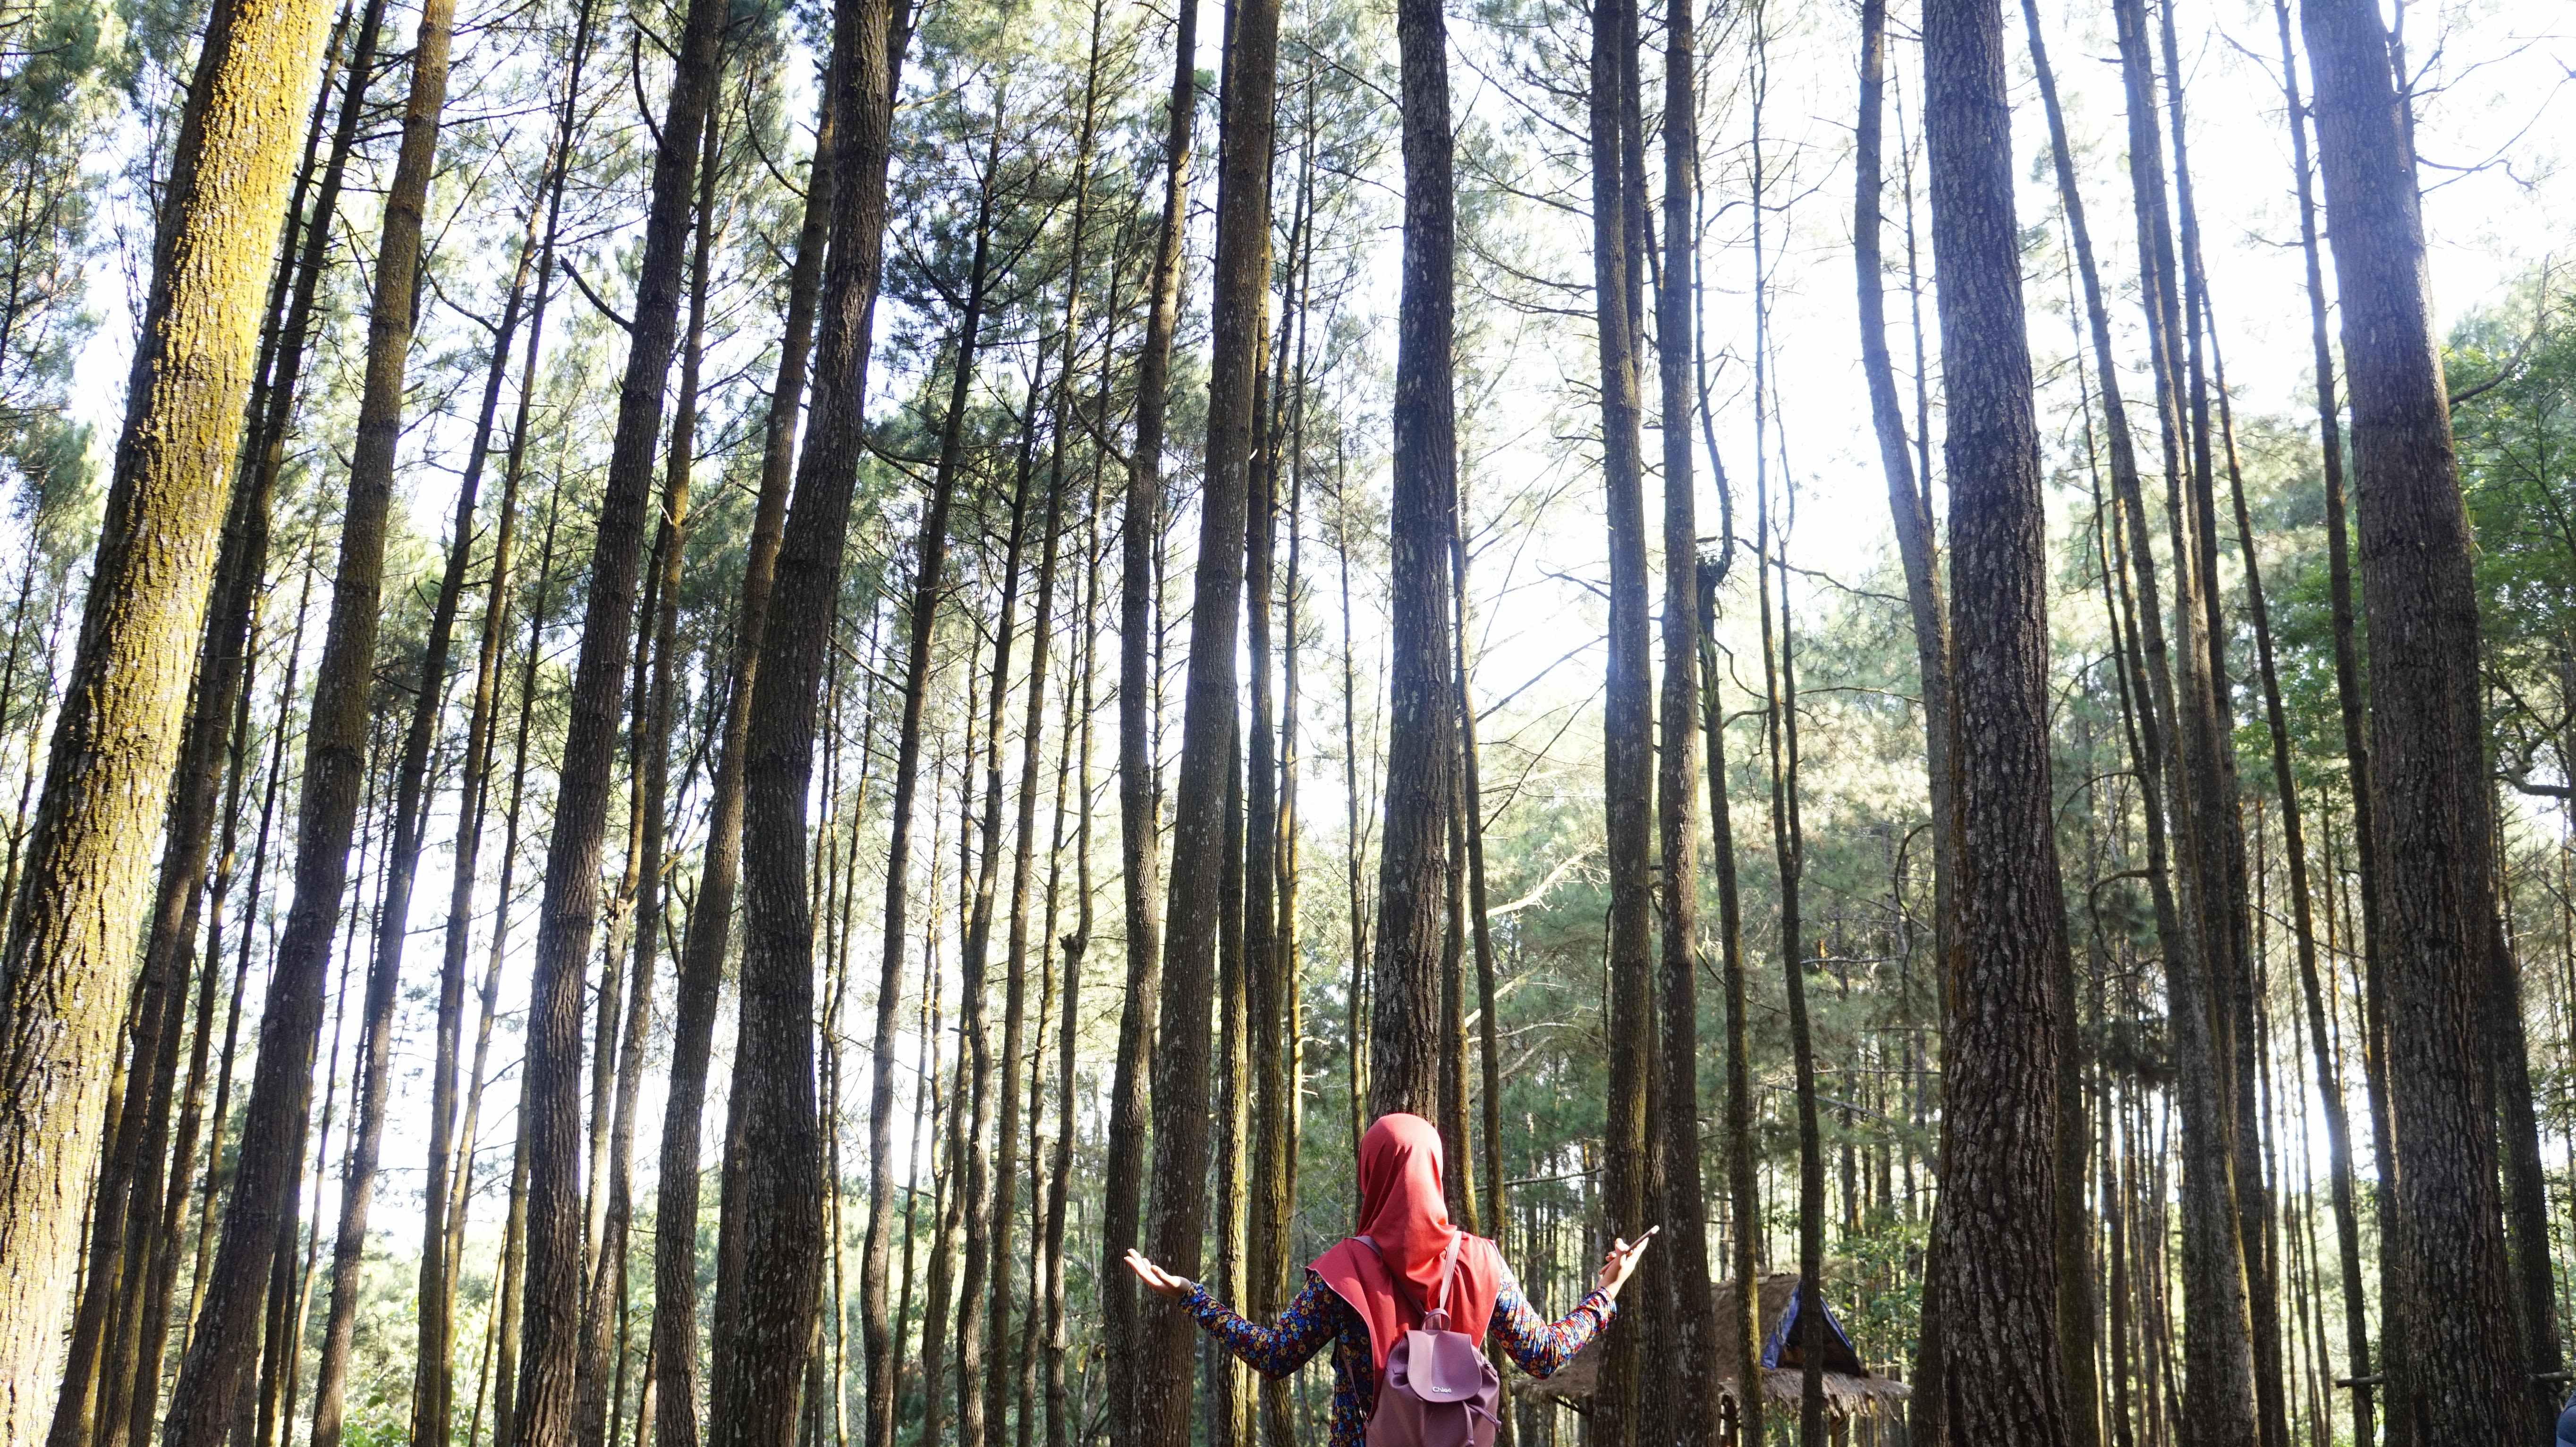 Hutan Pinus Mangunan, Yogyakarta (c) Alviani Suwoko/Travelingyuk